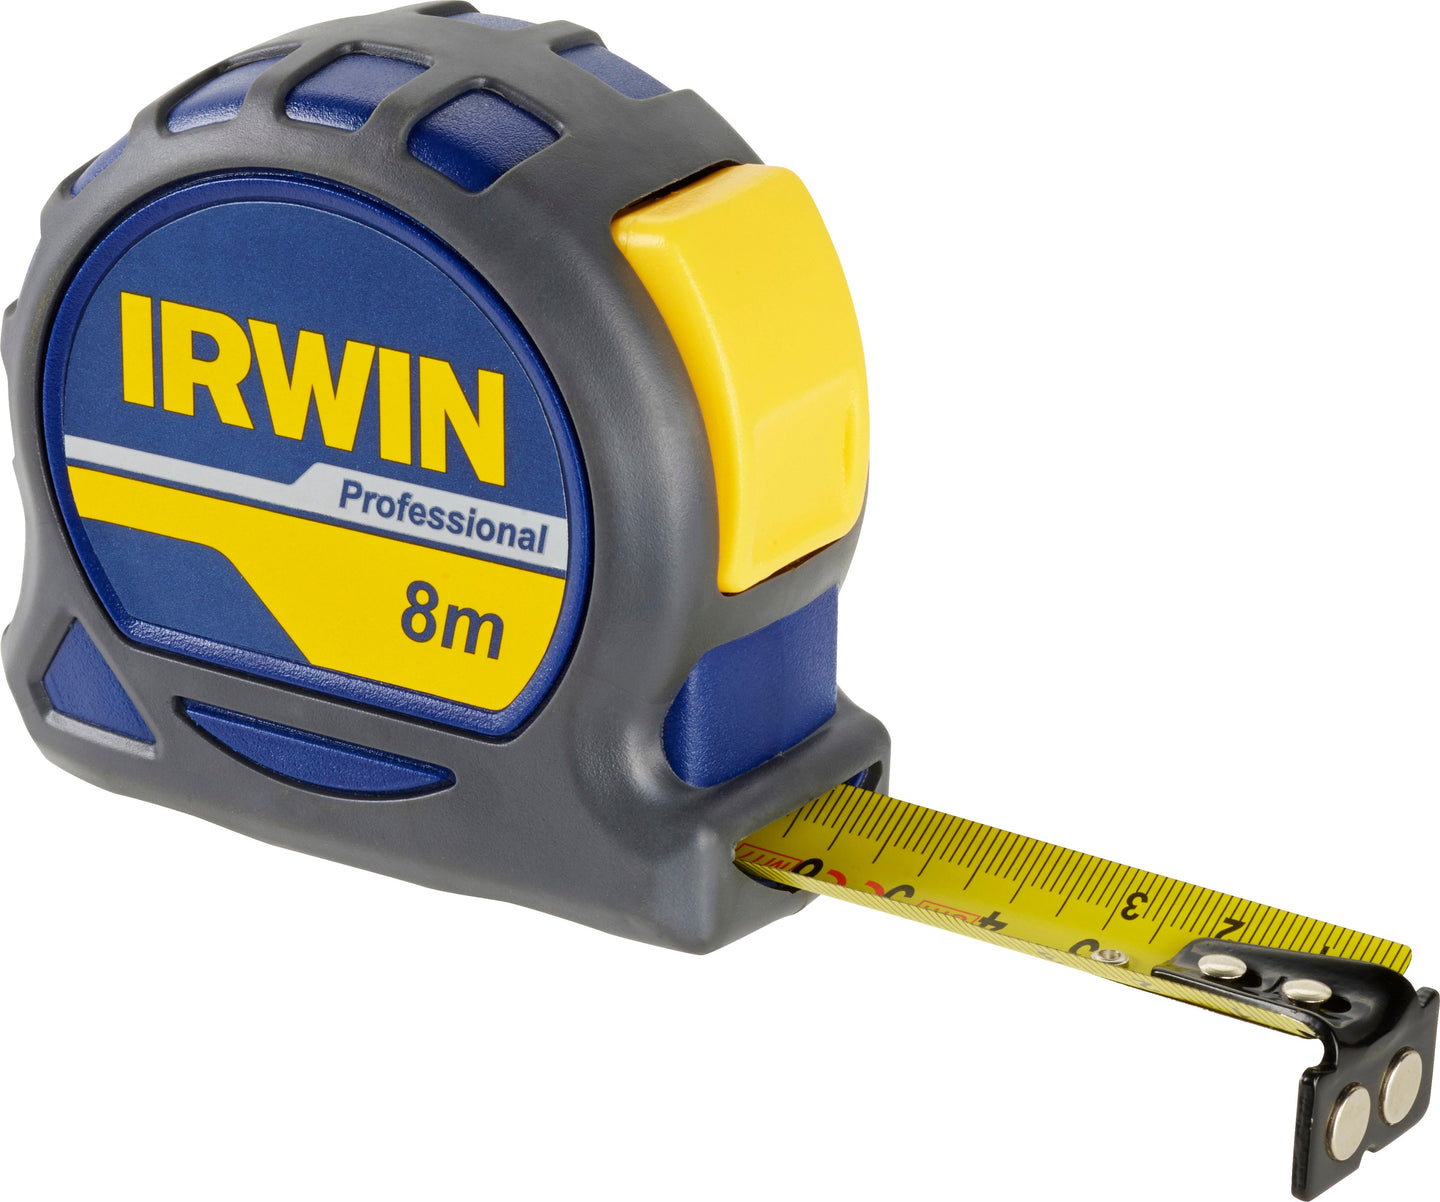 IRWIN Professional Tape Measure 8M Hook Magnets